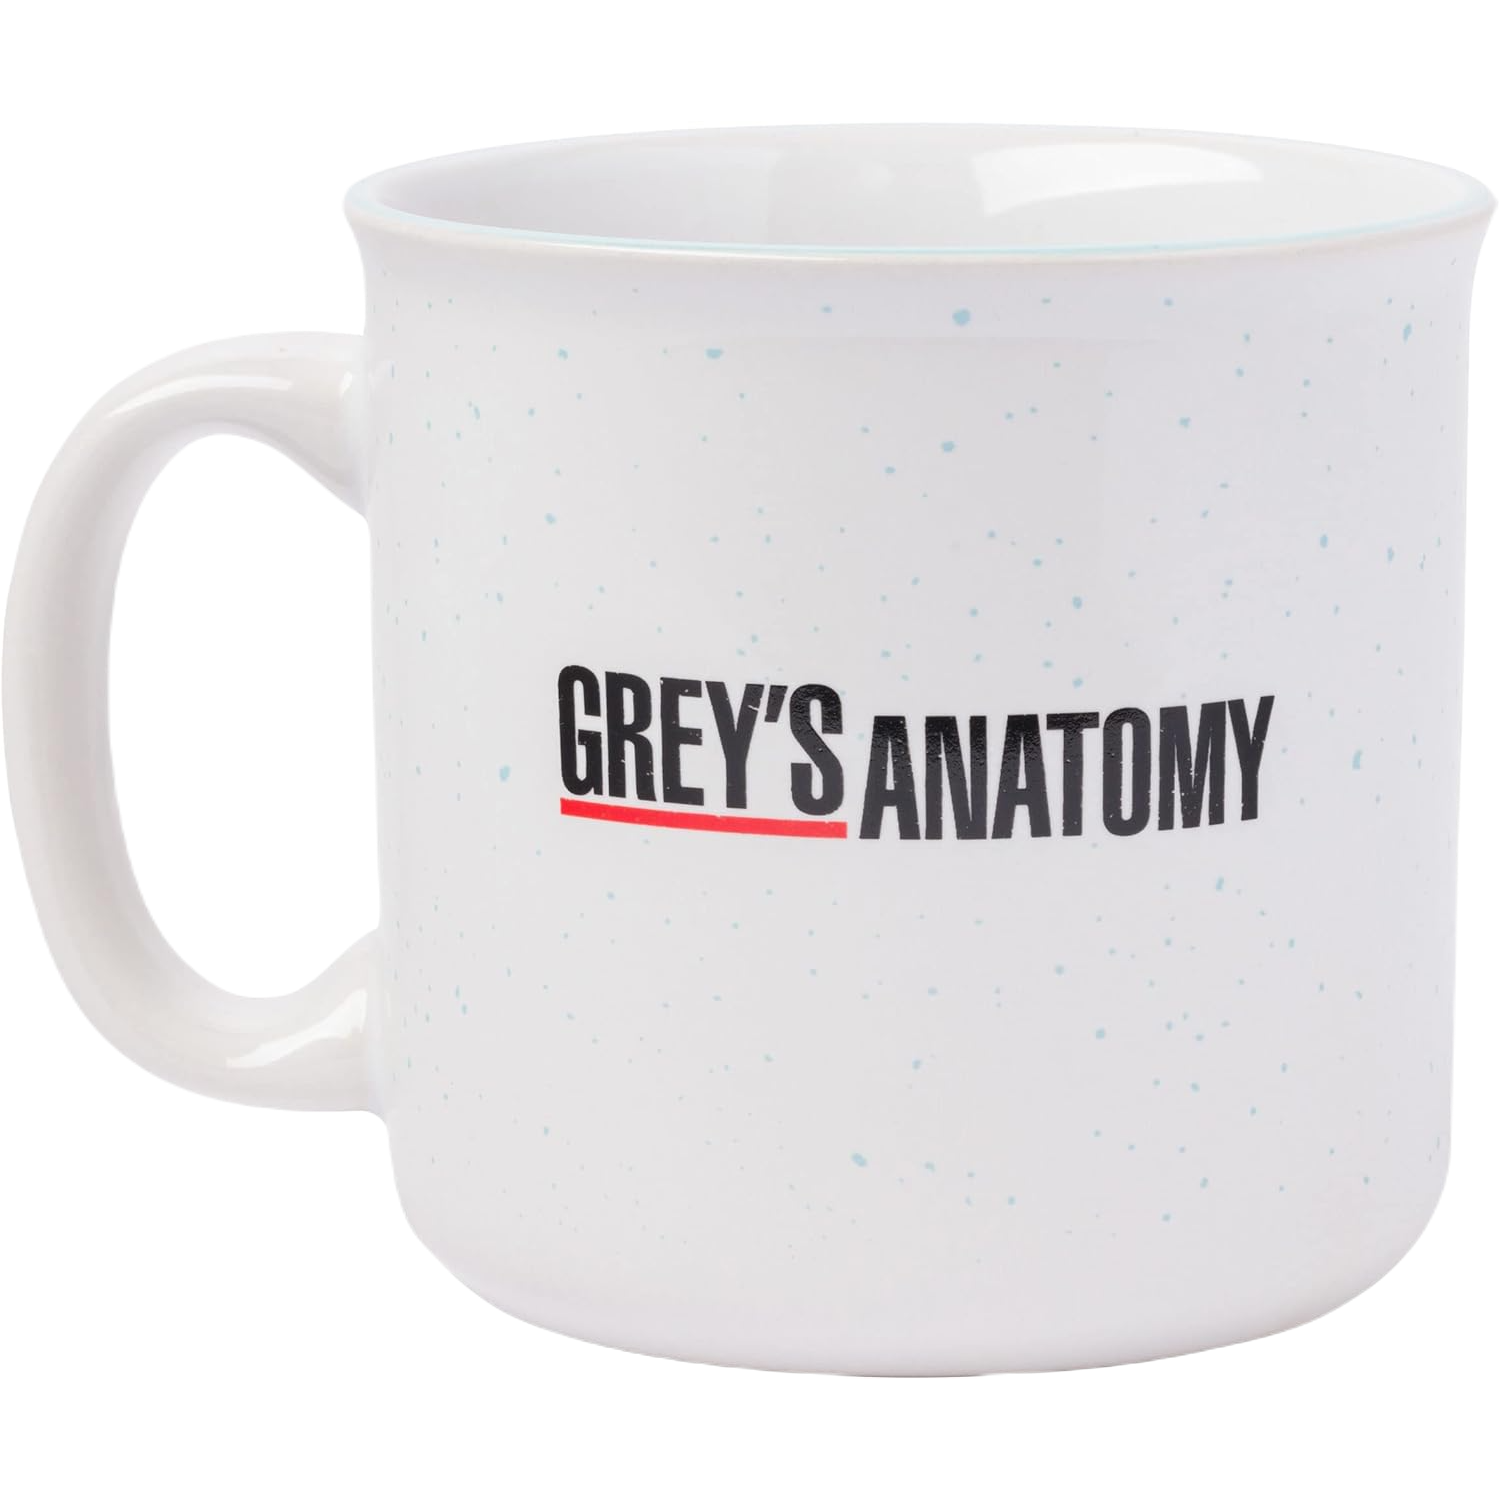 12 Must-Have Grey's Anatomy Merch Picks – Cozy Hoodies & More